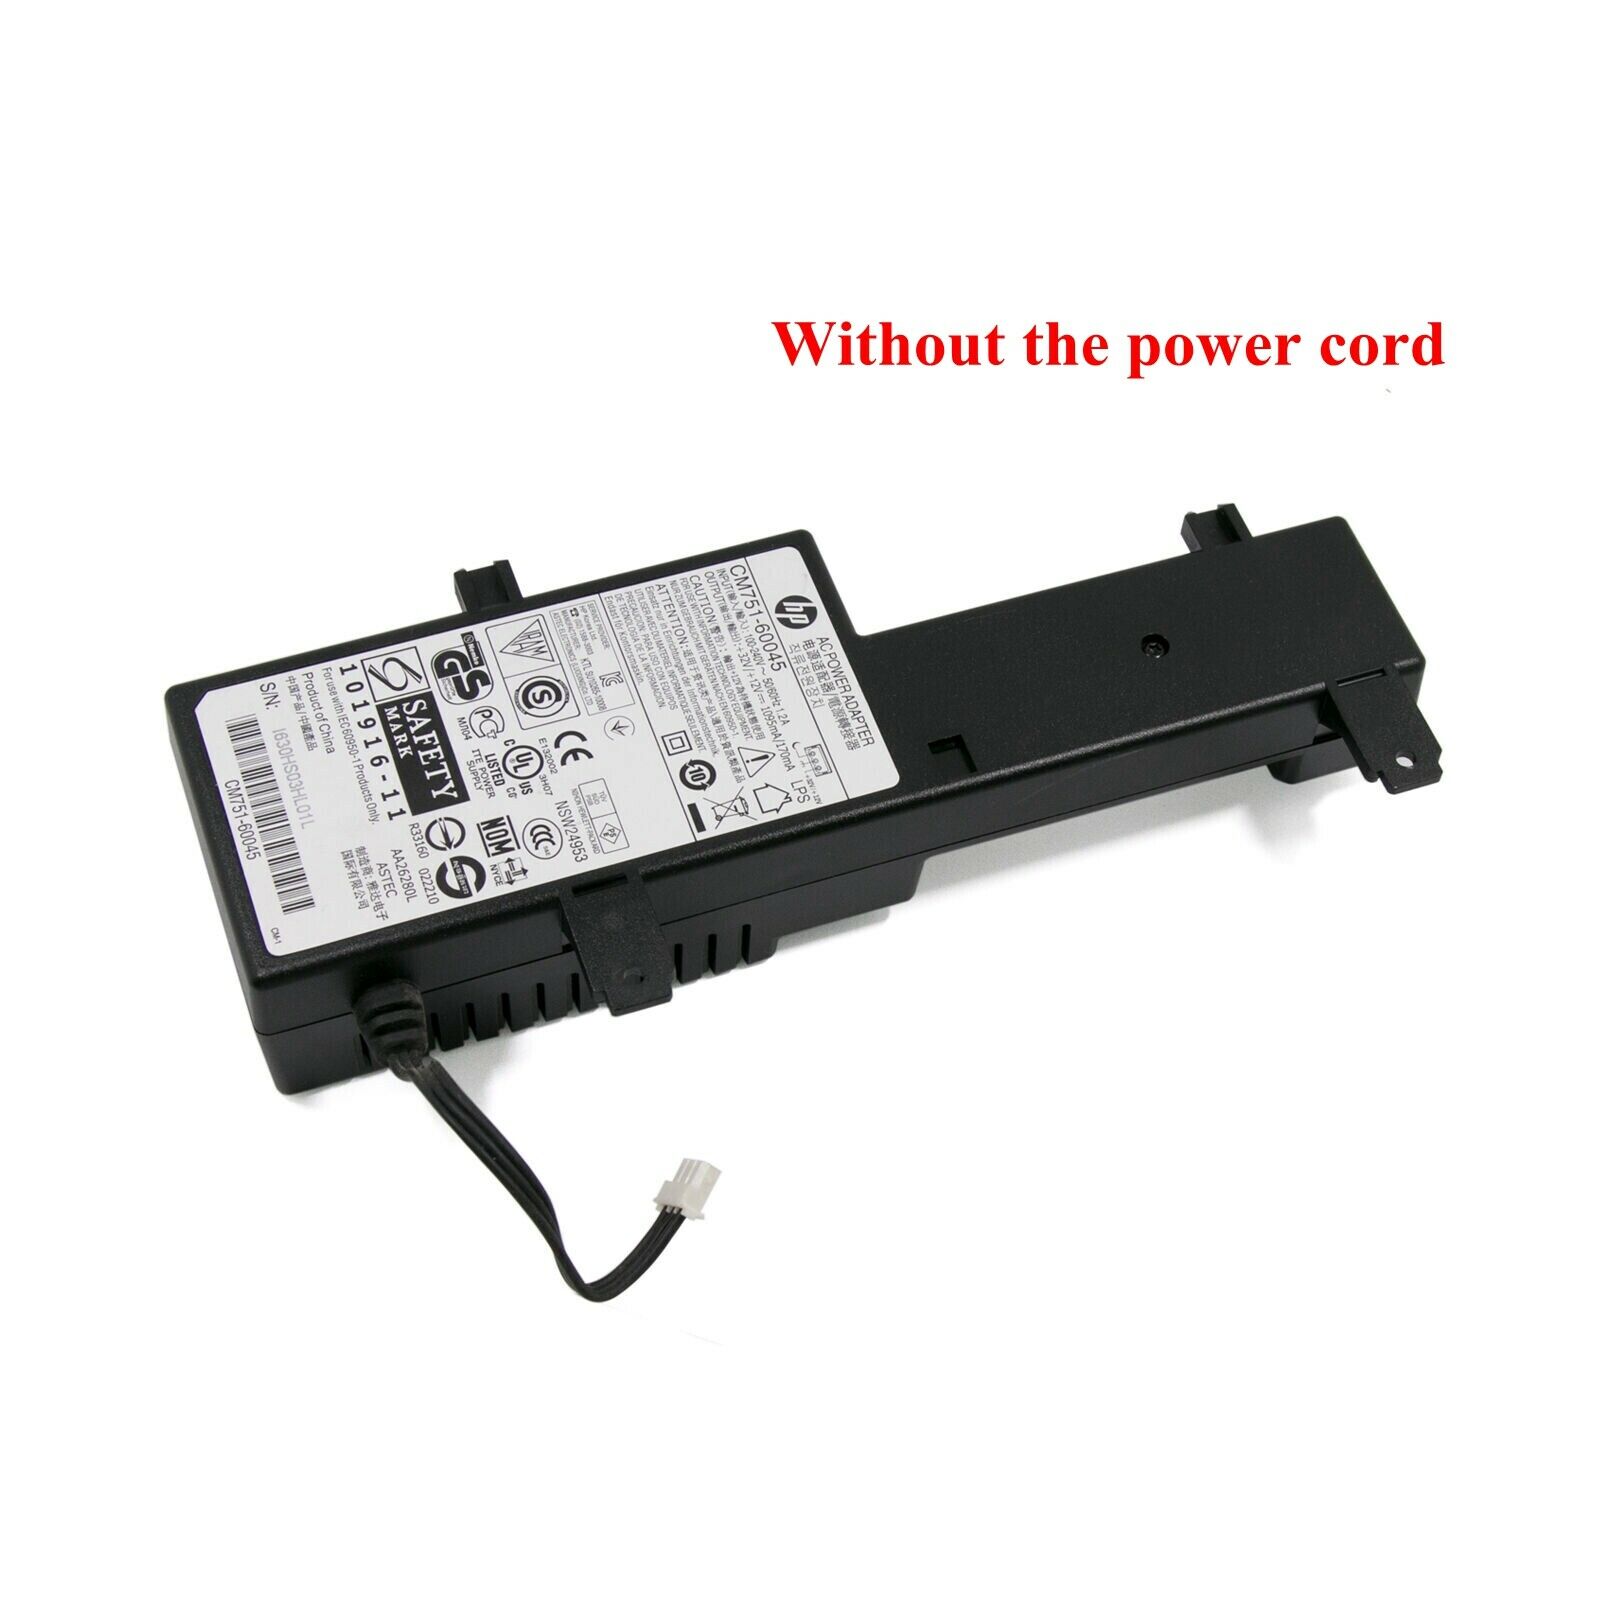 Ac Dc Adapter Power For Hp Cm751-60045 Officejet Pro 8600 8100 N911 N811